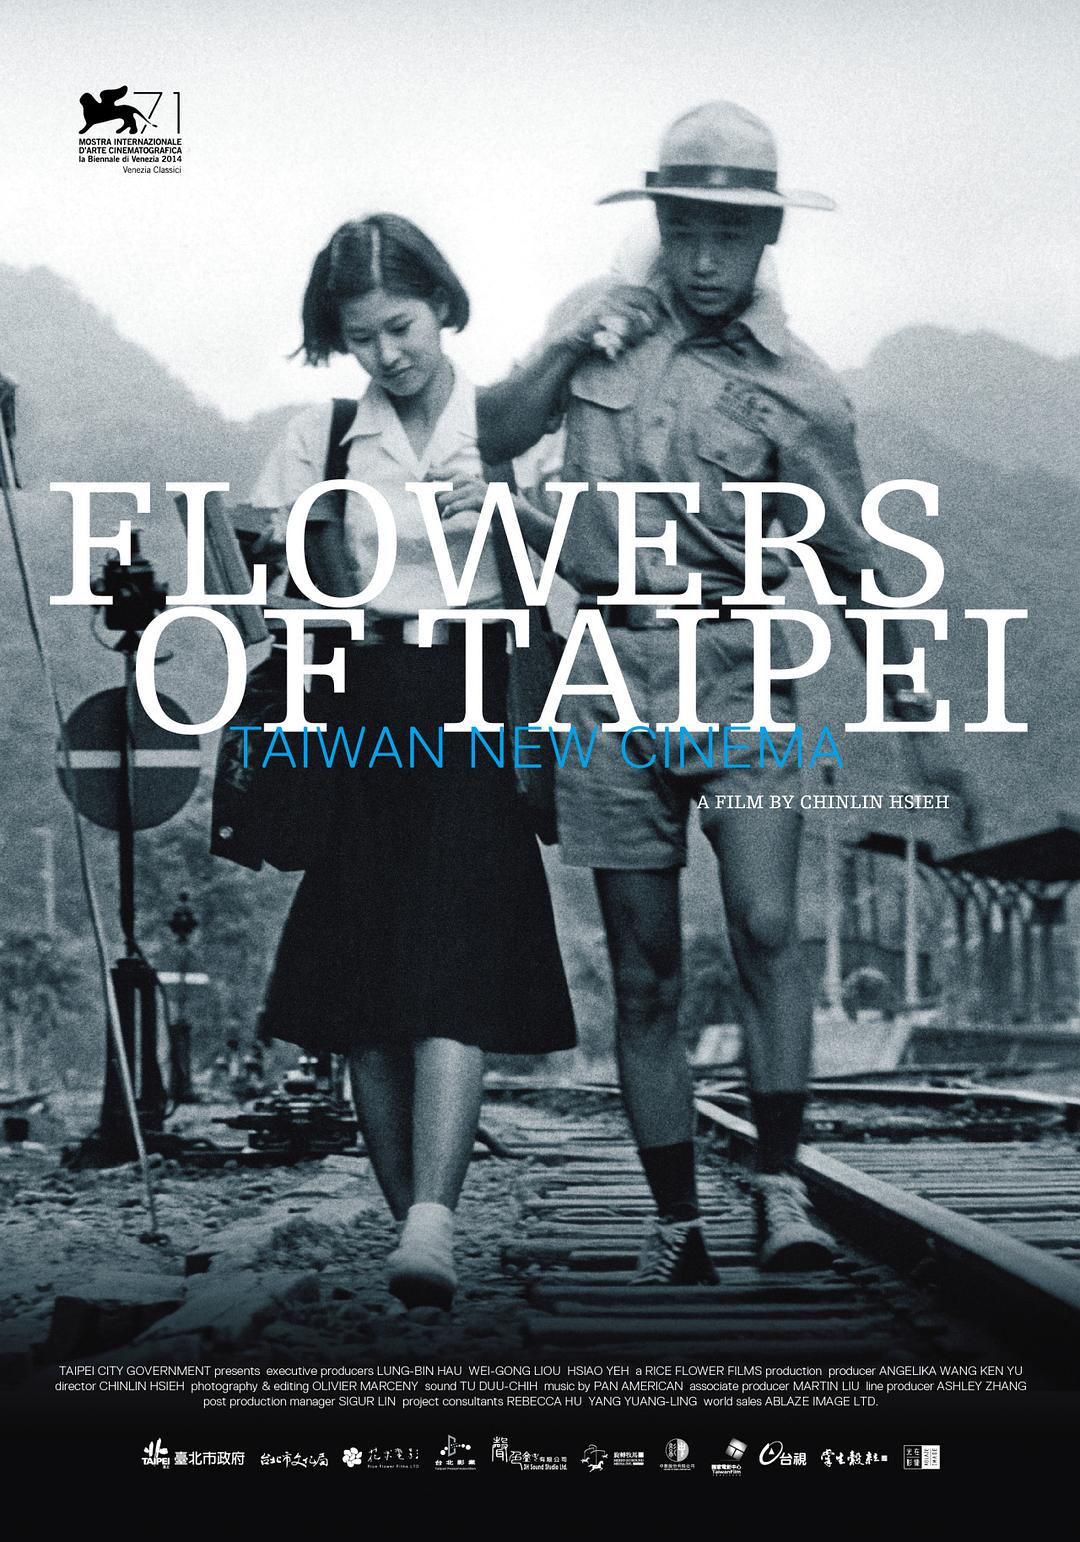 工夫的故事－台湾新电影 Flowers.of.Taipei.Taiwan.New.Cinema.2014.CHINESE.1080p.BluRay.x264-HANDJOB 9.10GB-1.png